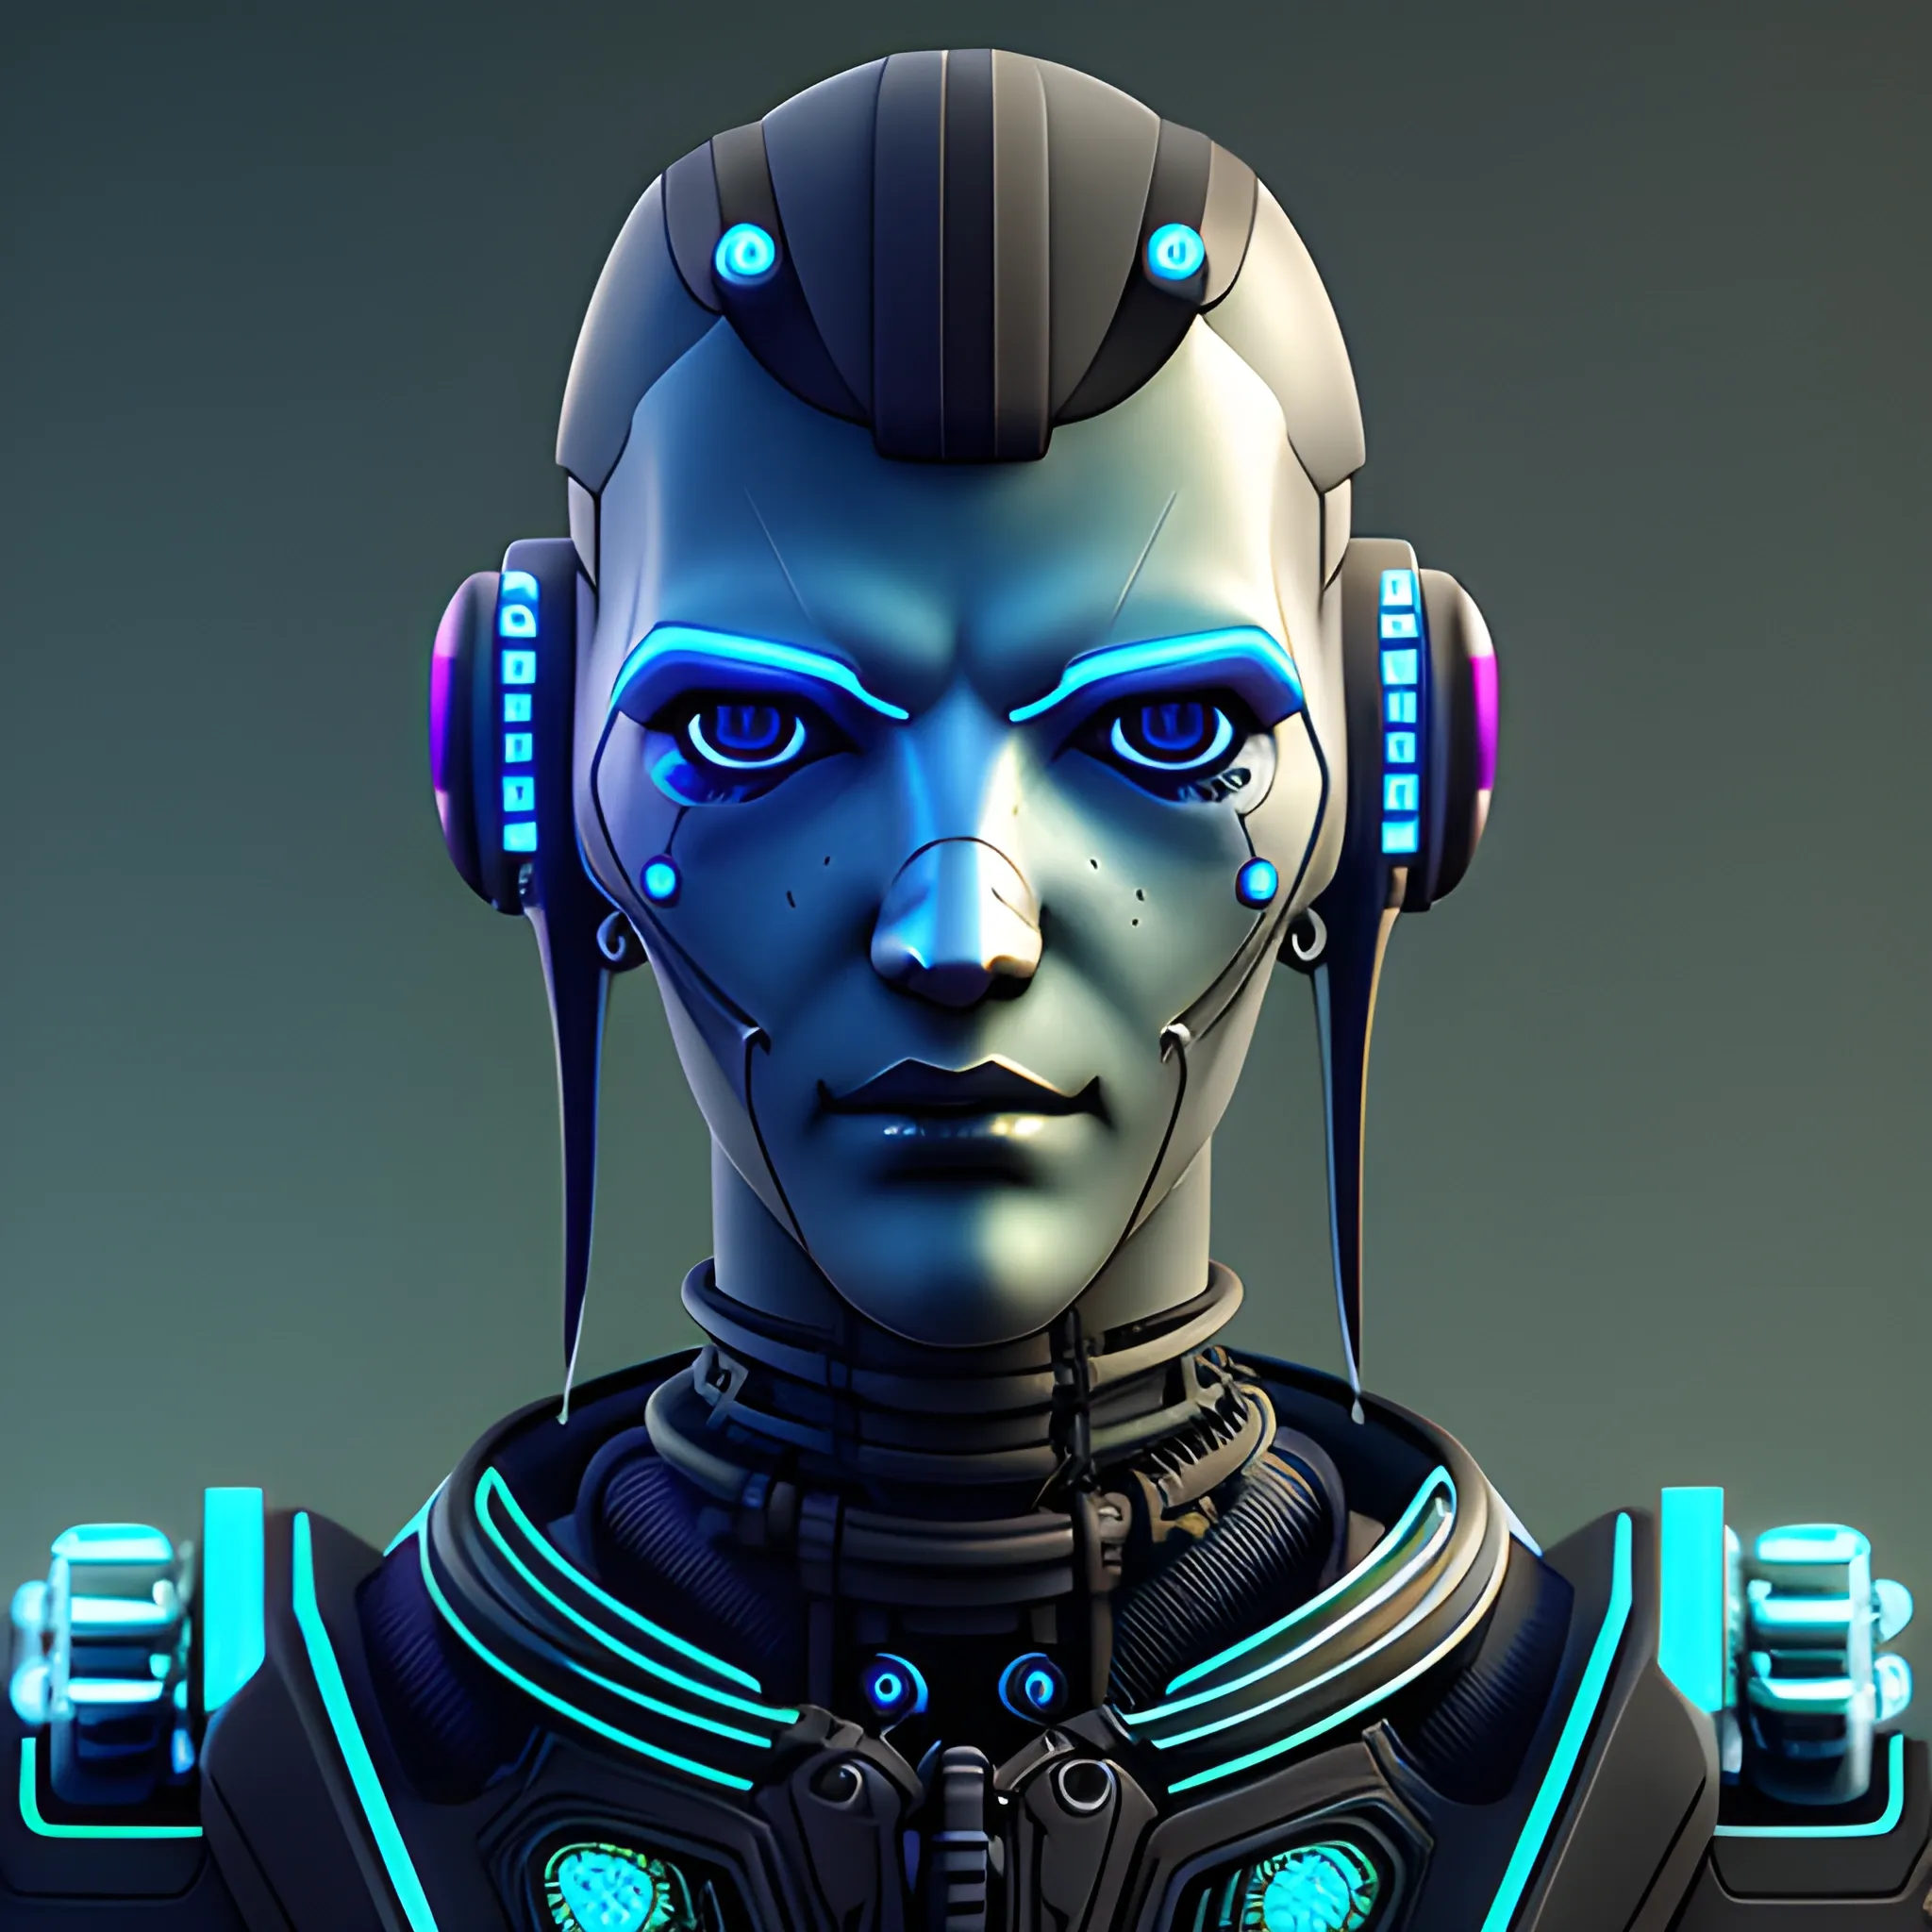 Cyberpunk style robot avatar, digital style, high quality, 3D, 3D